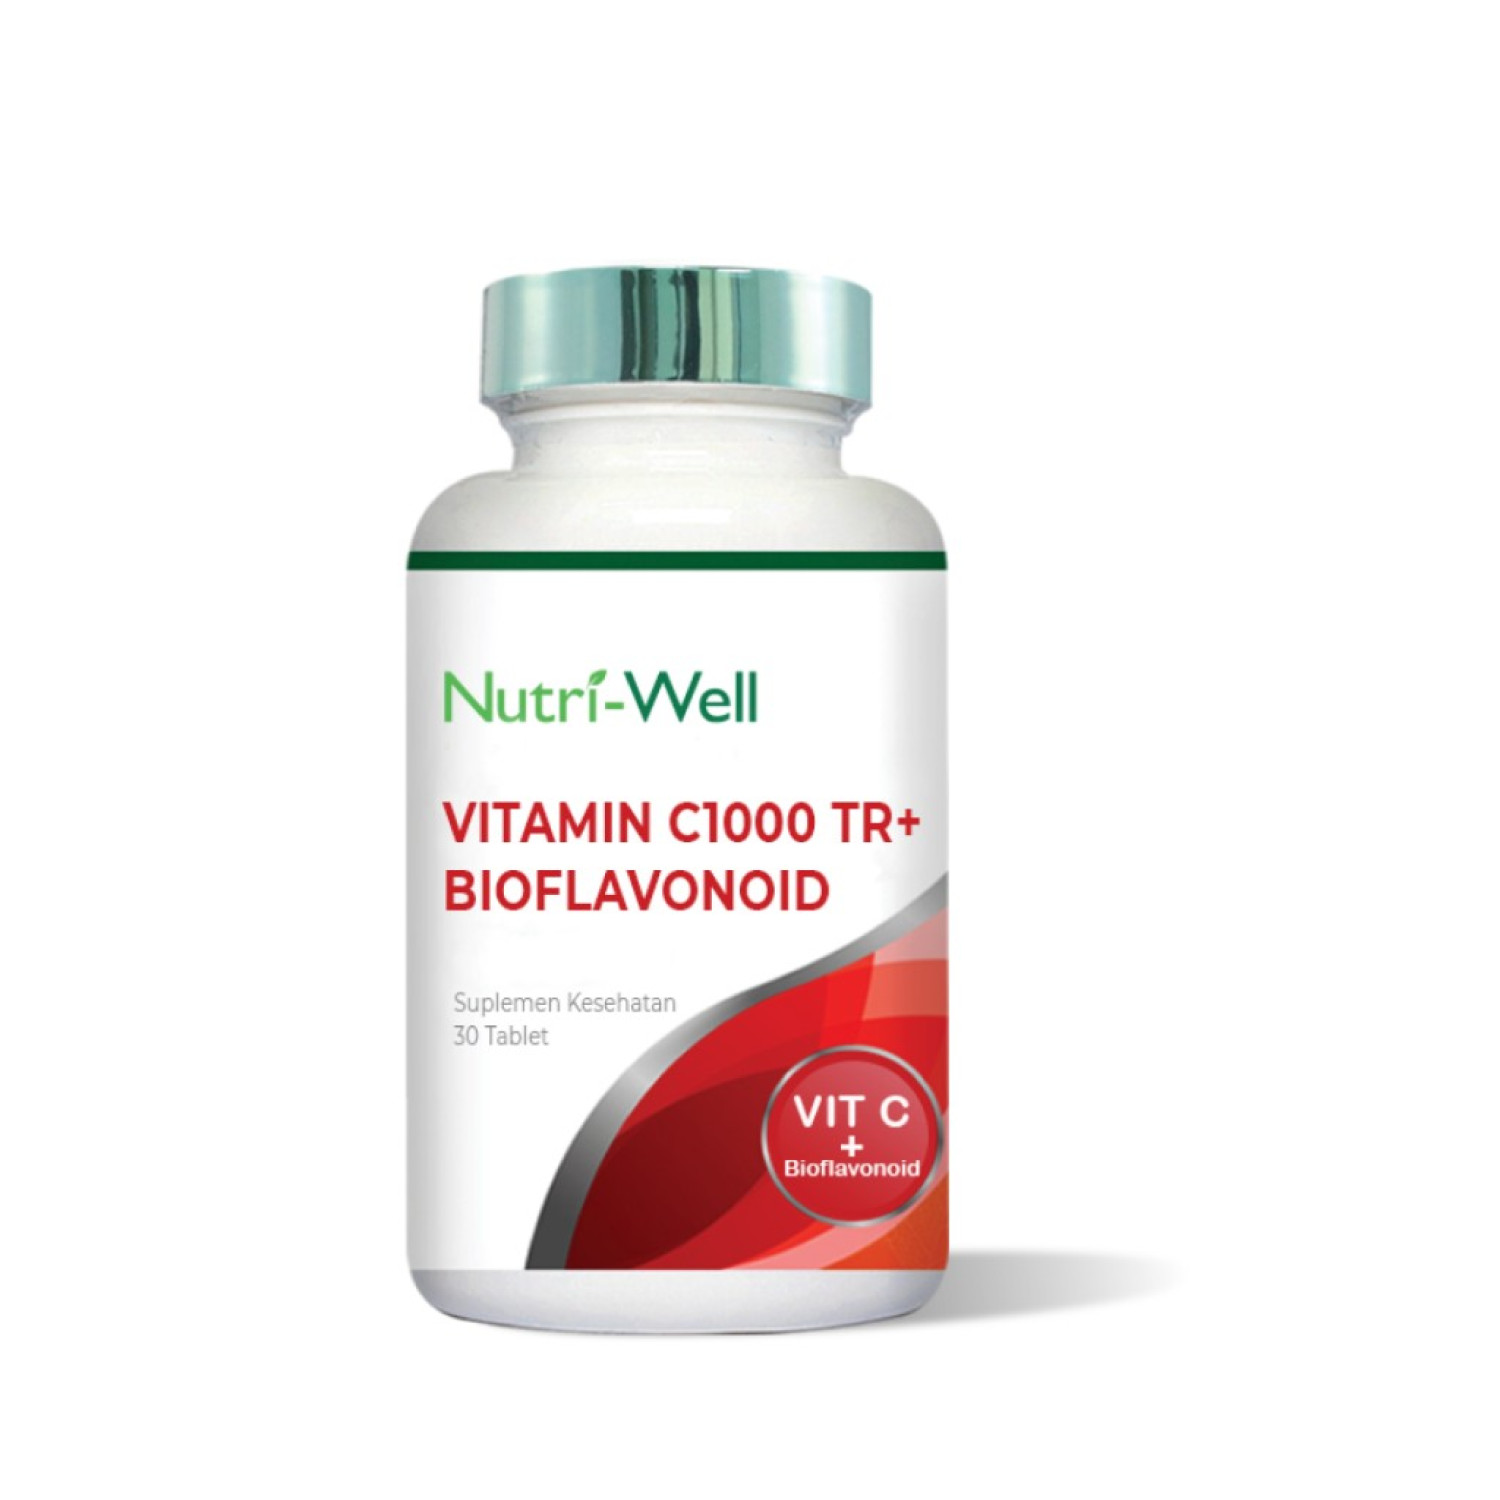 nutriwell-vitamin-c-buffered-1000mg-time-release-bioflavonoid-30-tablet-654323cc2b455.jpeg